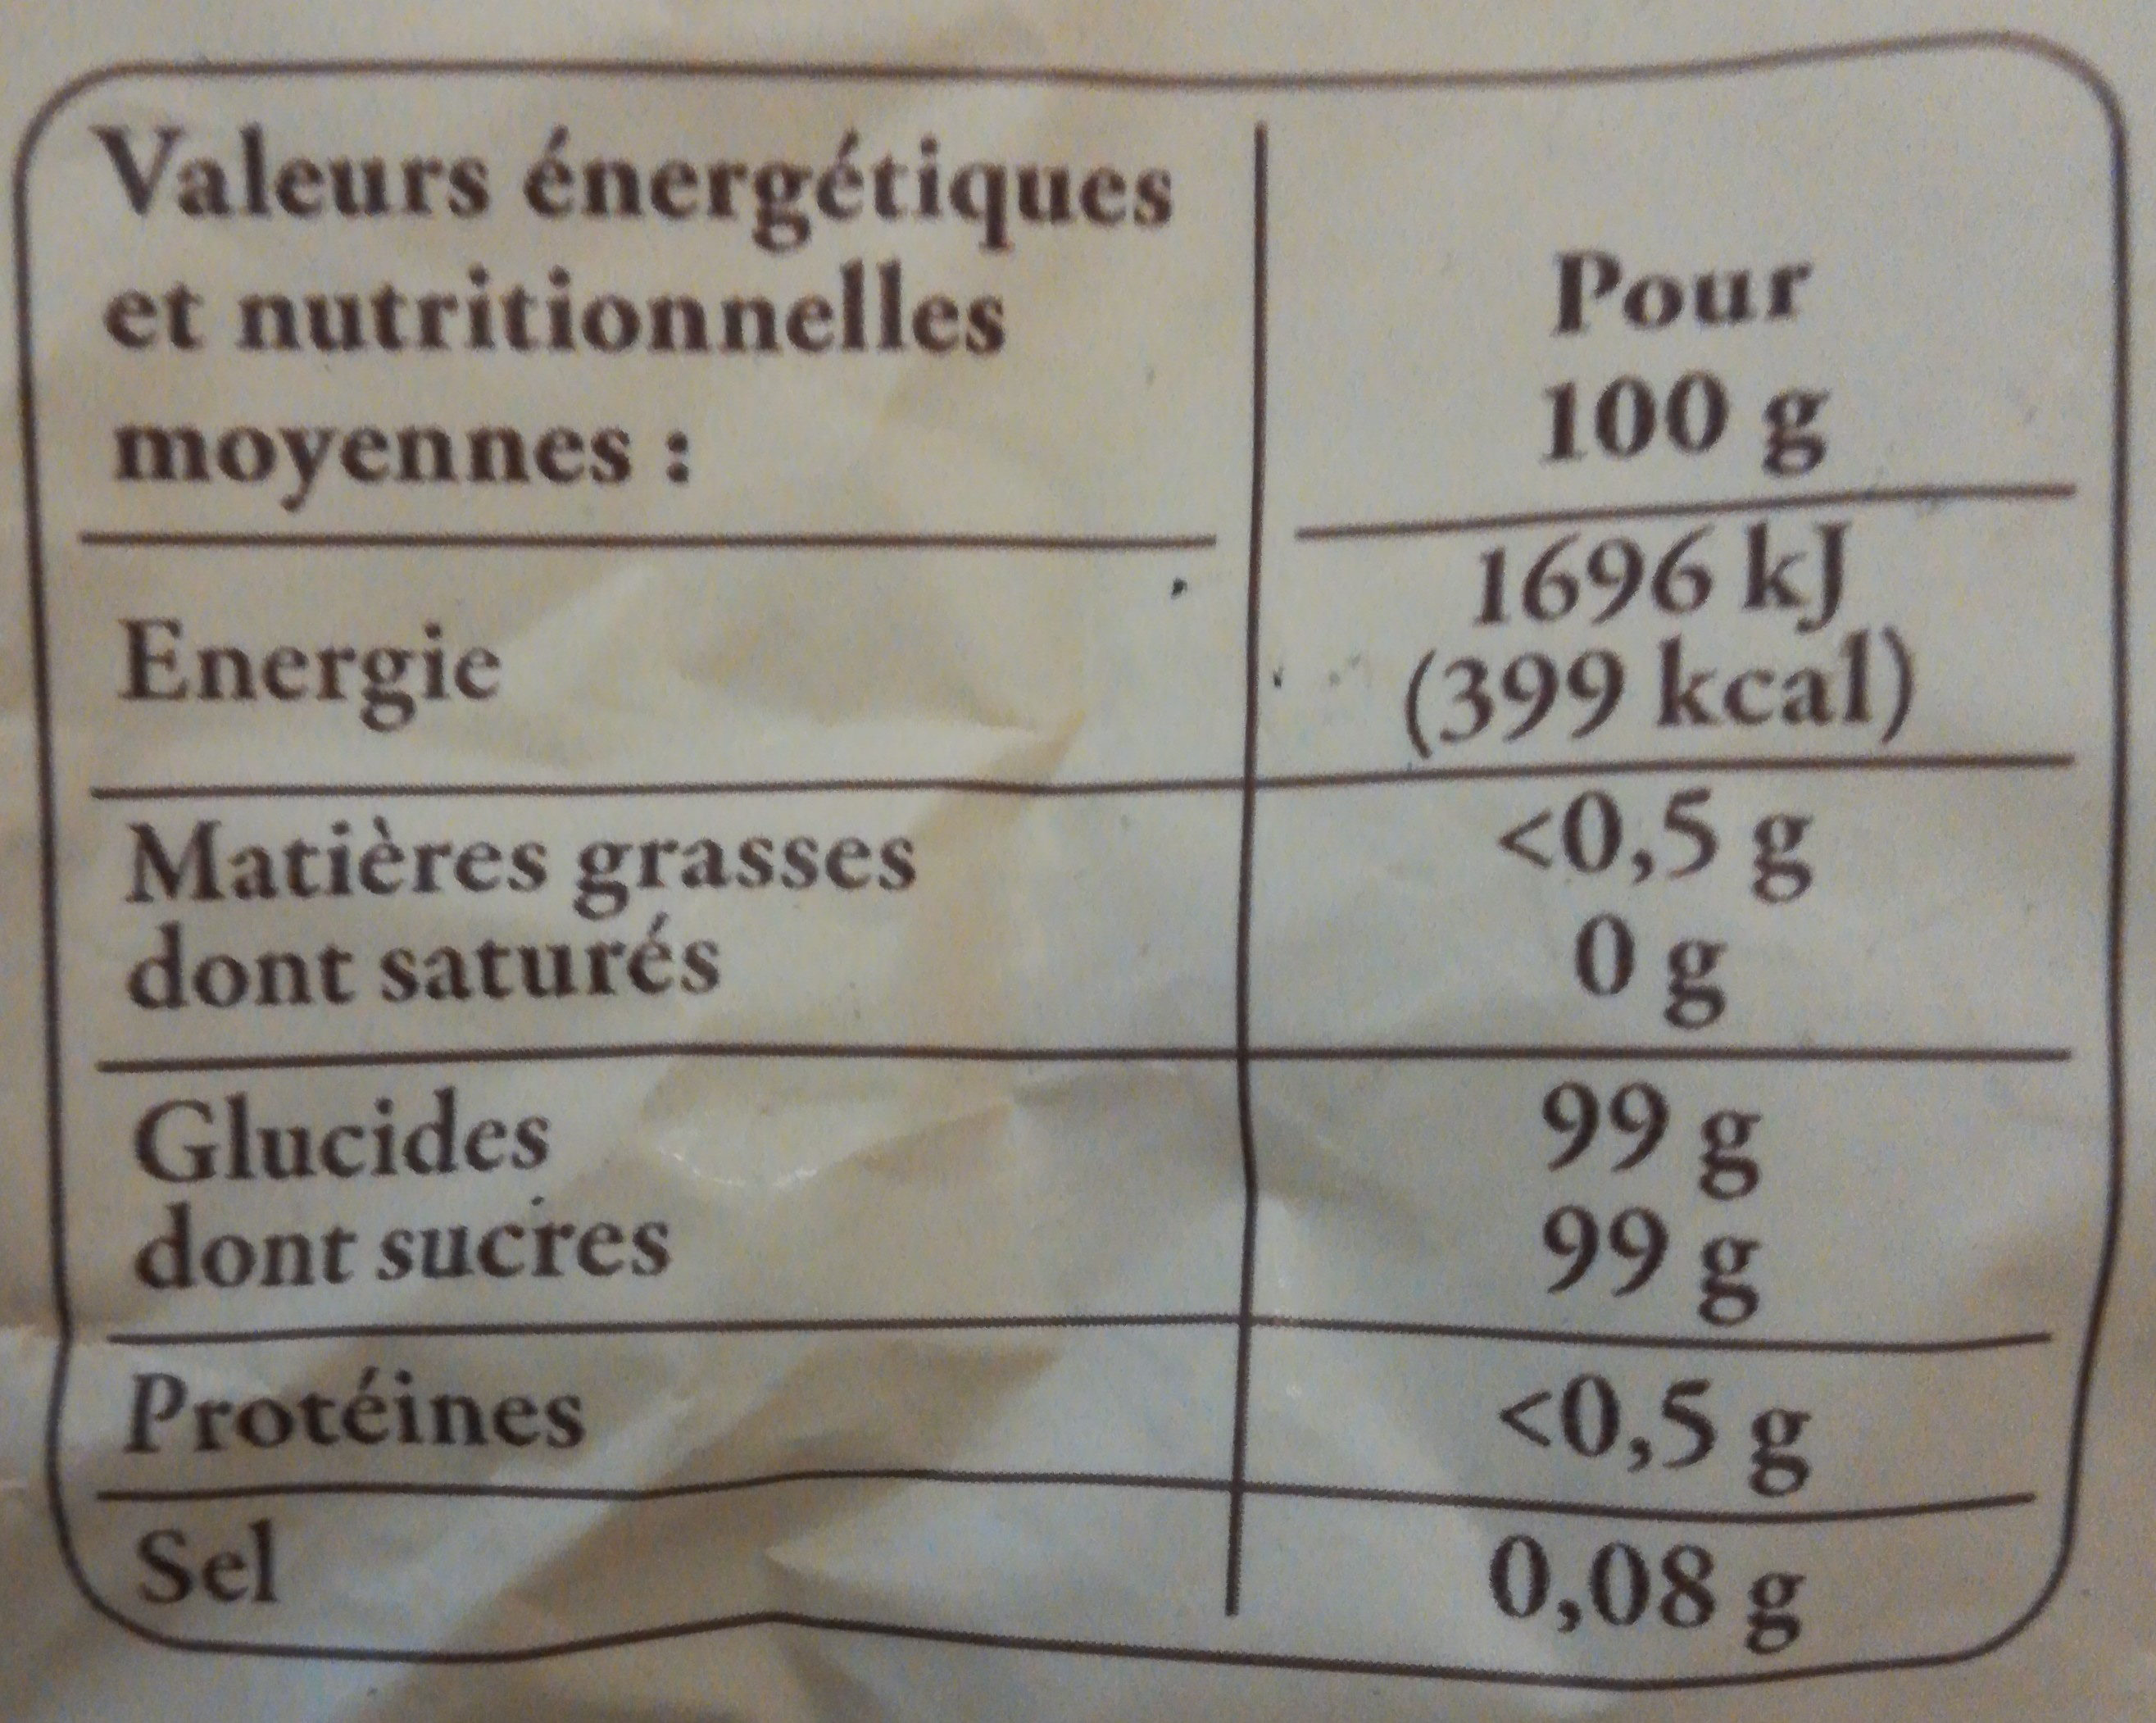 Pastilles du bassin de Vichy - Nutrition facts - fr